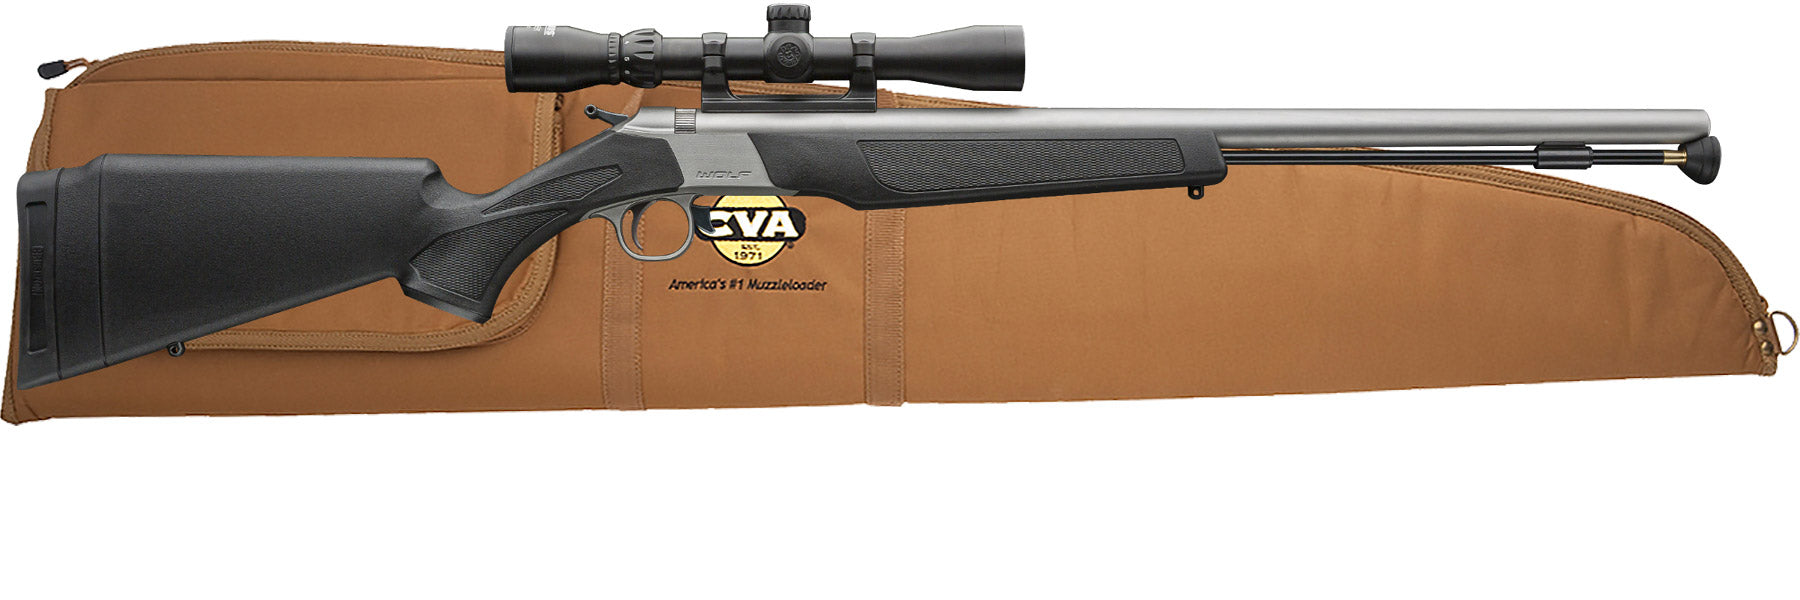 CVA™ Wolf V2 Rifle - Konus™ Scope Combo - PR2117SSC